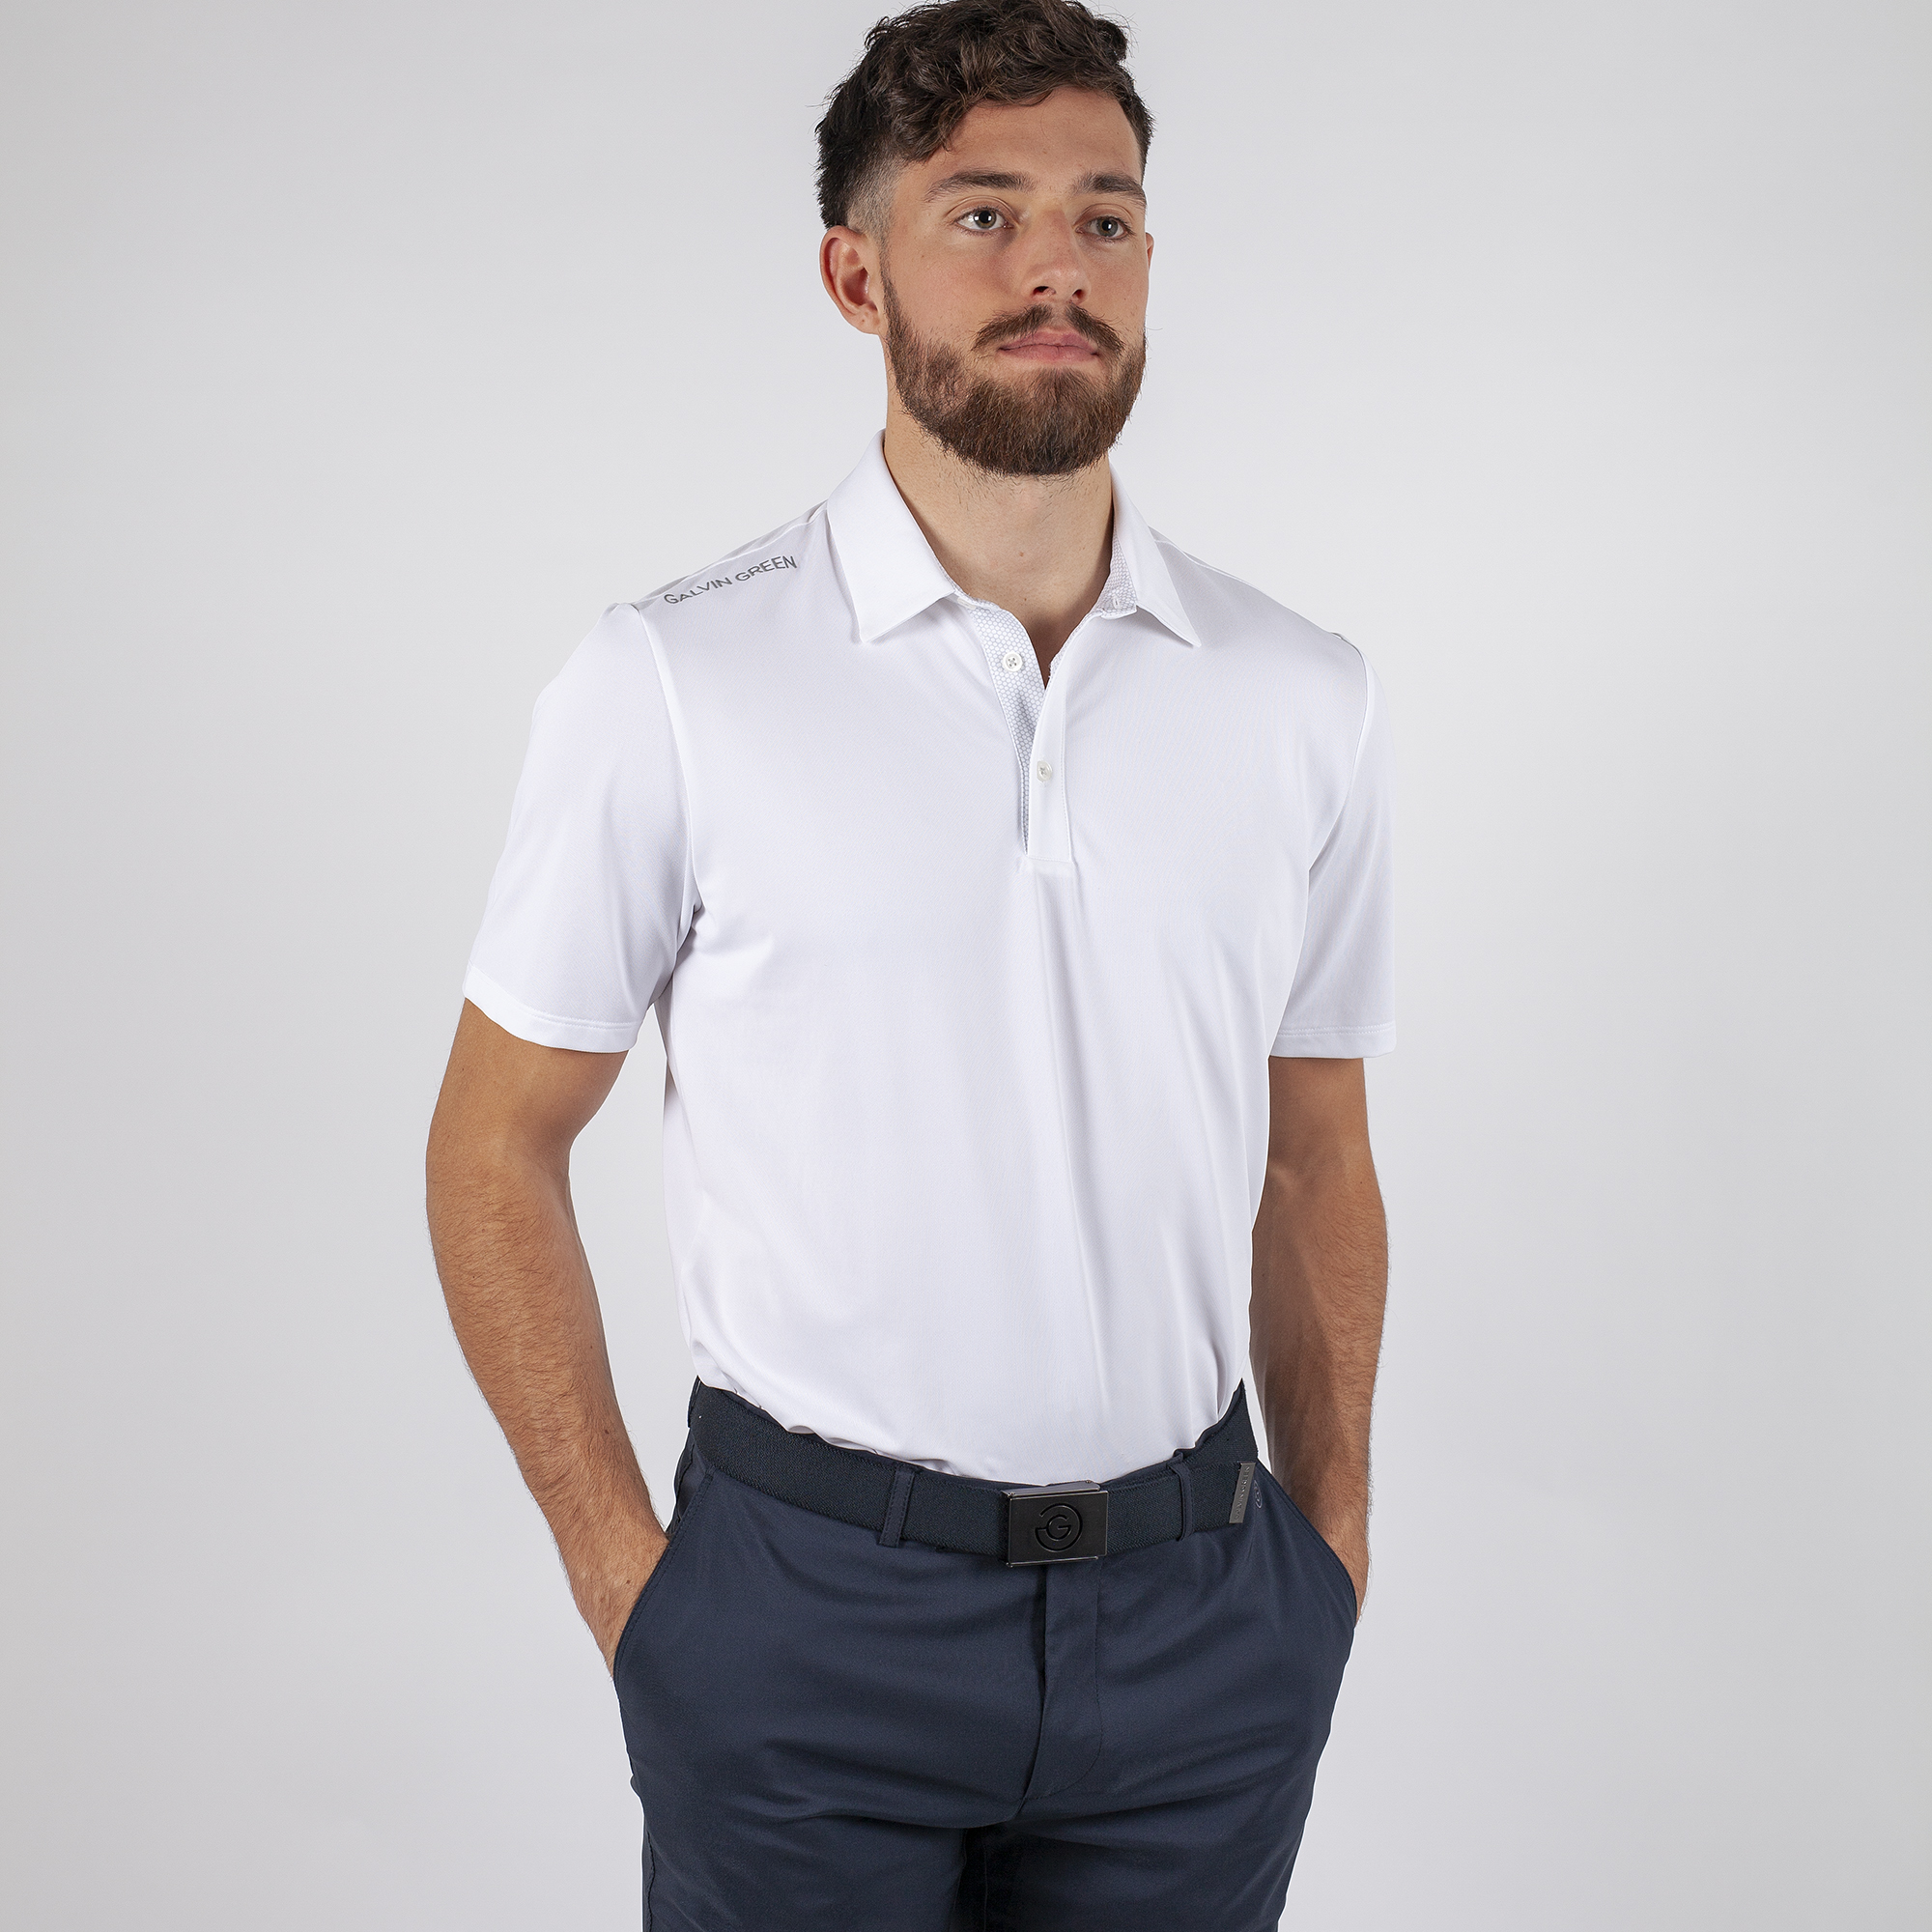 Galvin Green Milan Tour Ventil8 Plus Polo Shirt White | Scottsdale Golf